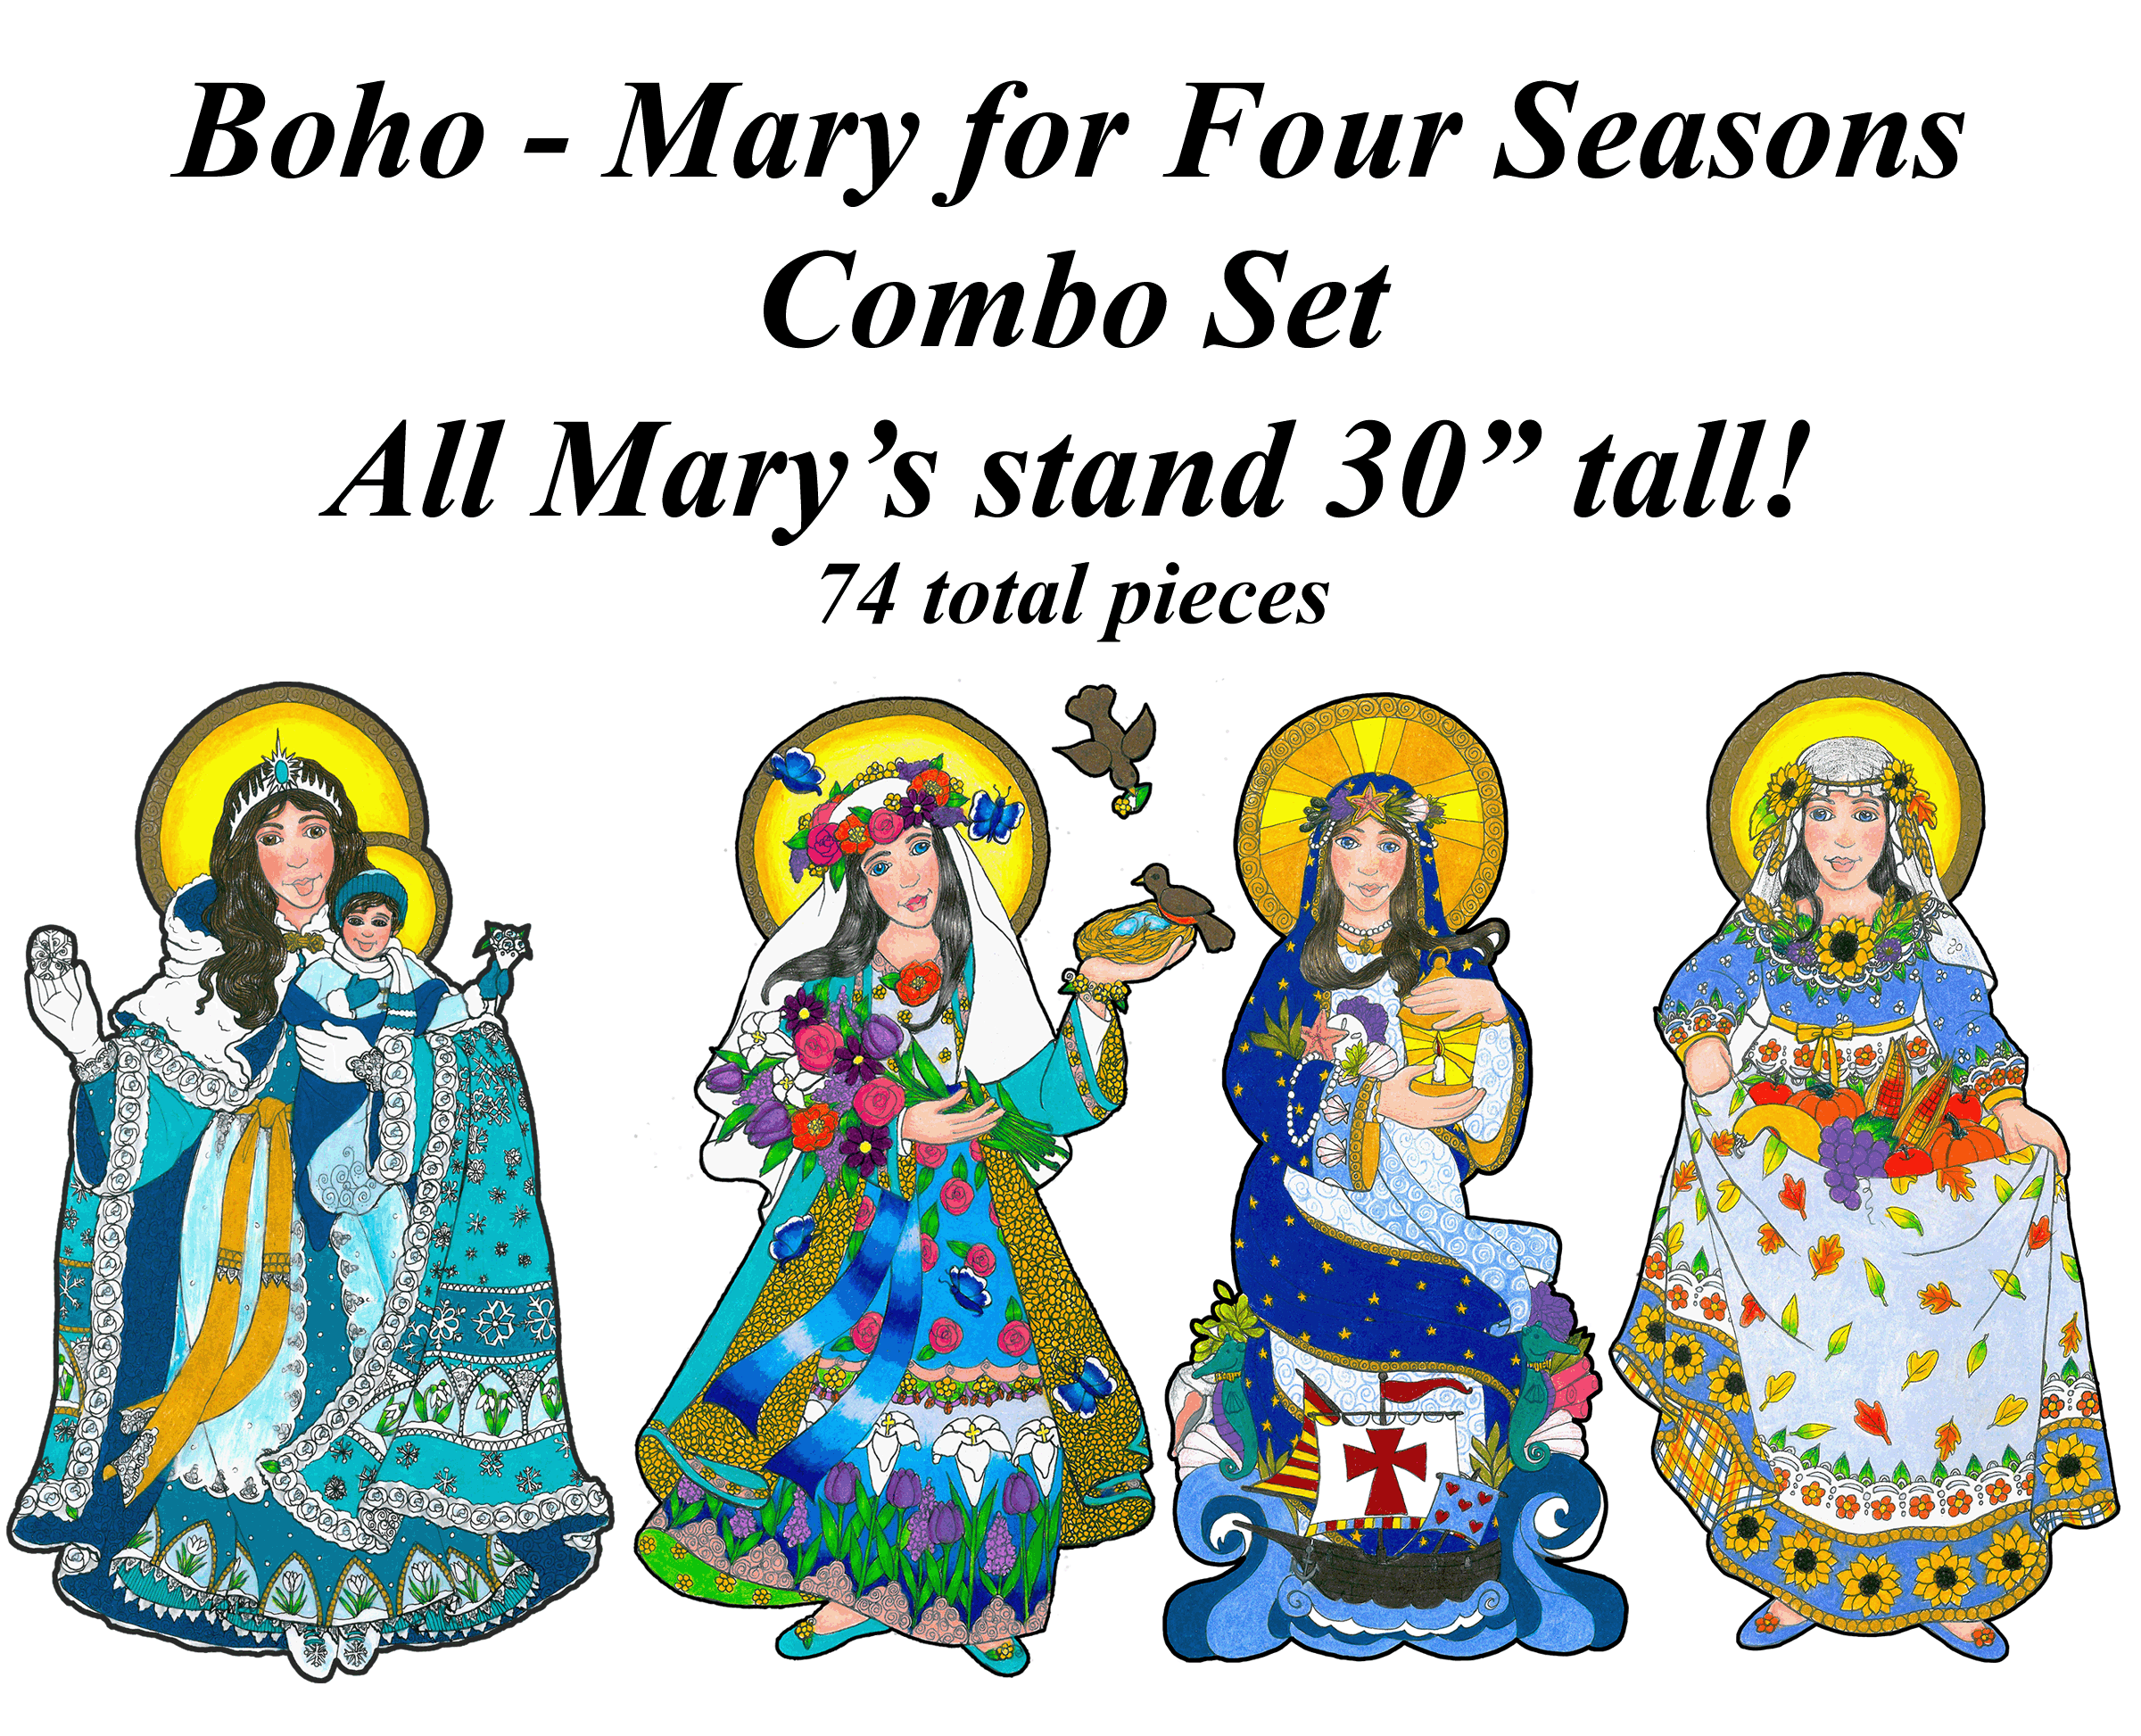 Boho - Mary for Four Seasons